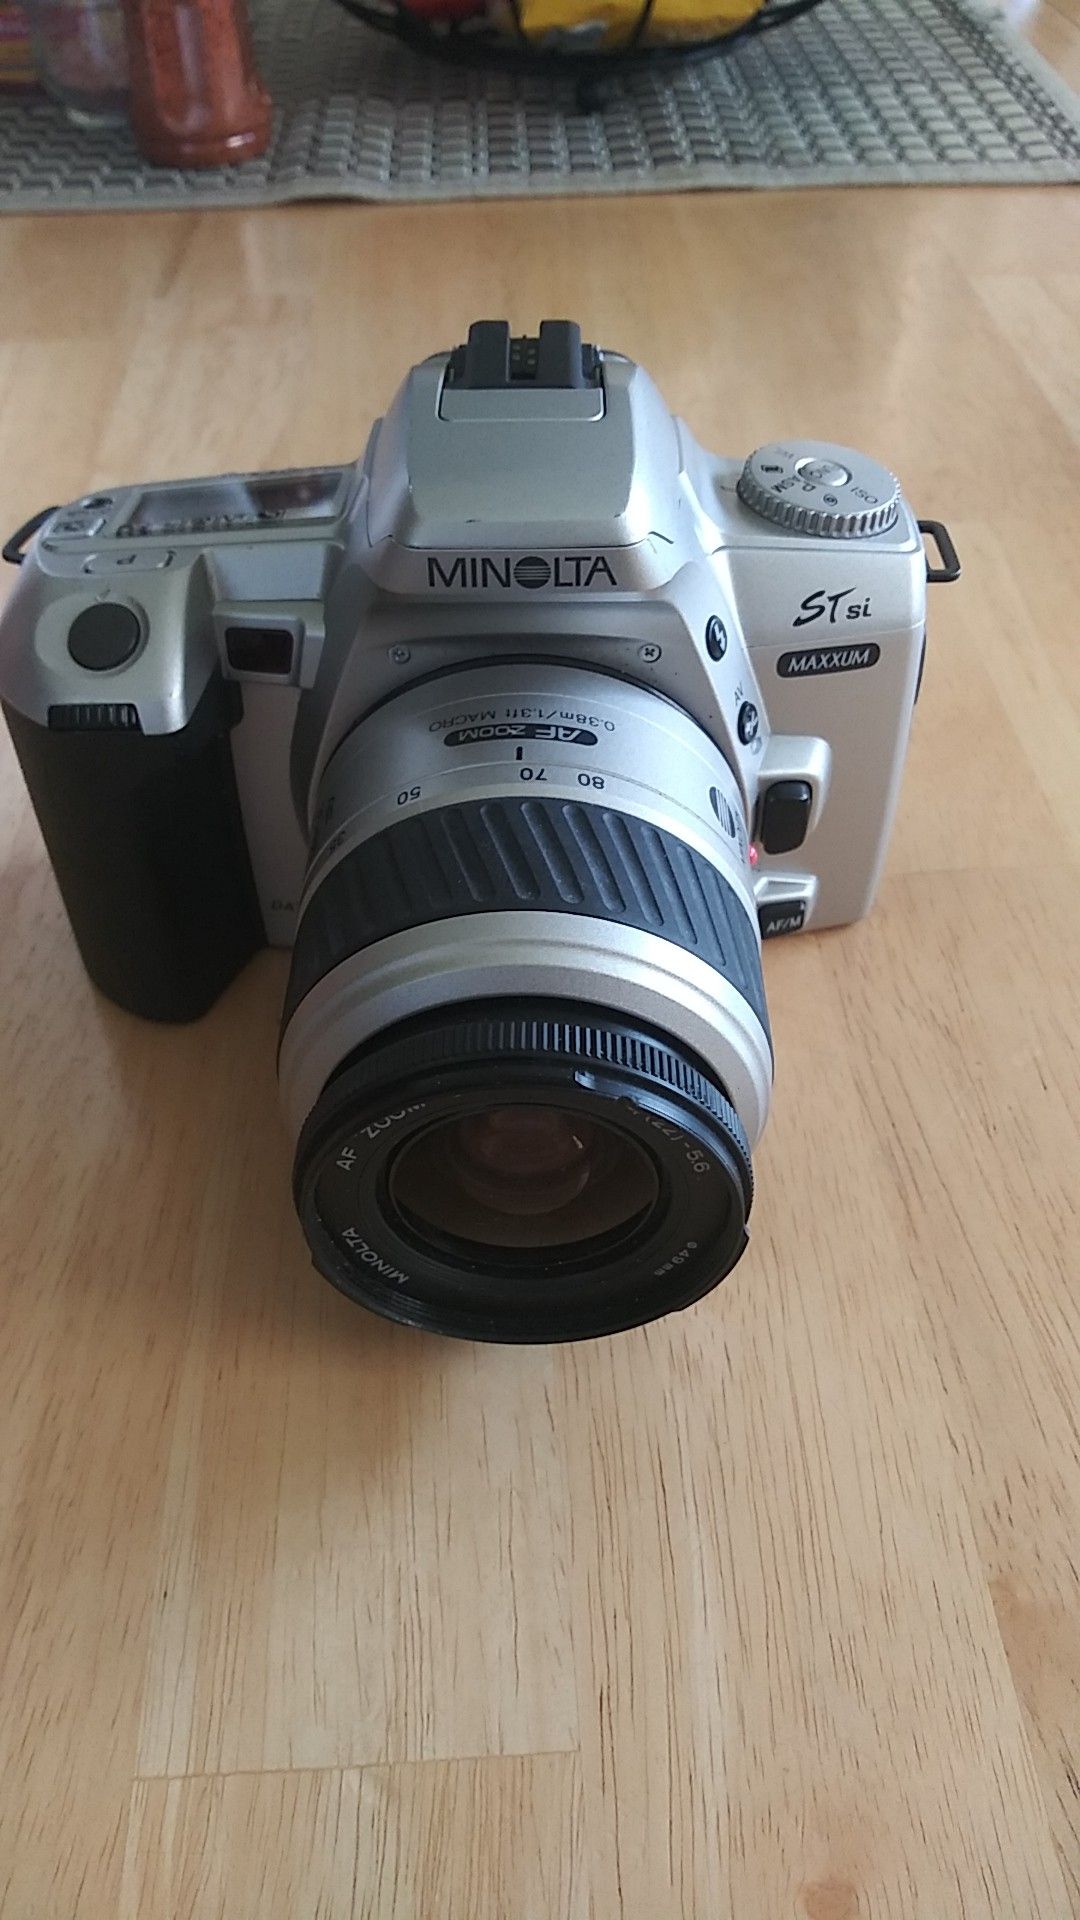 Minolta ST si Maxxum Date 35 mm Film camera with 35-80mm Lens